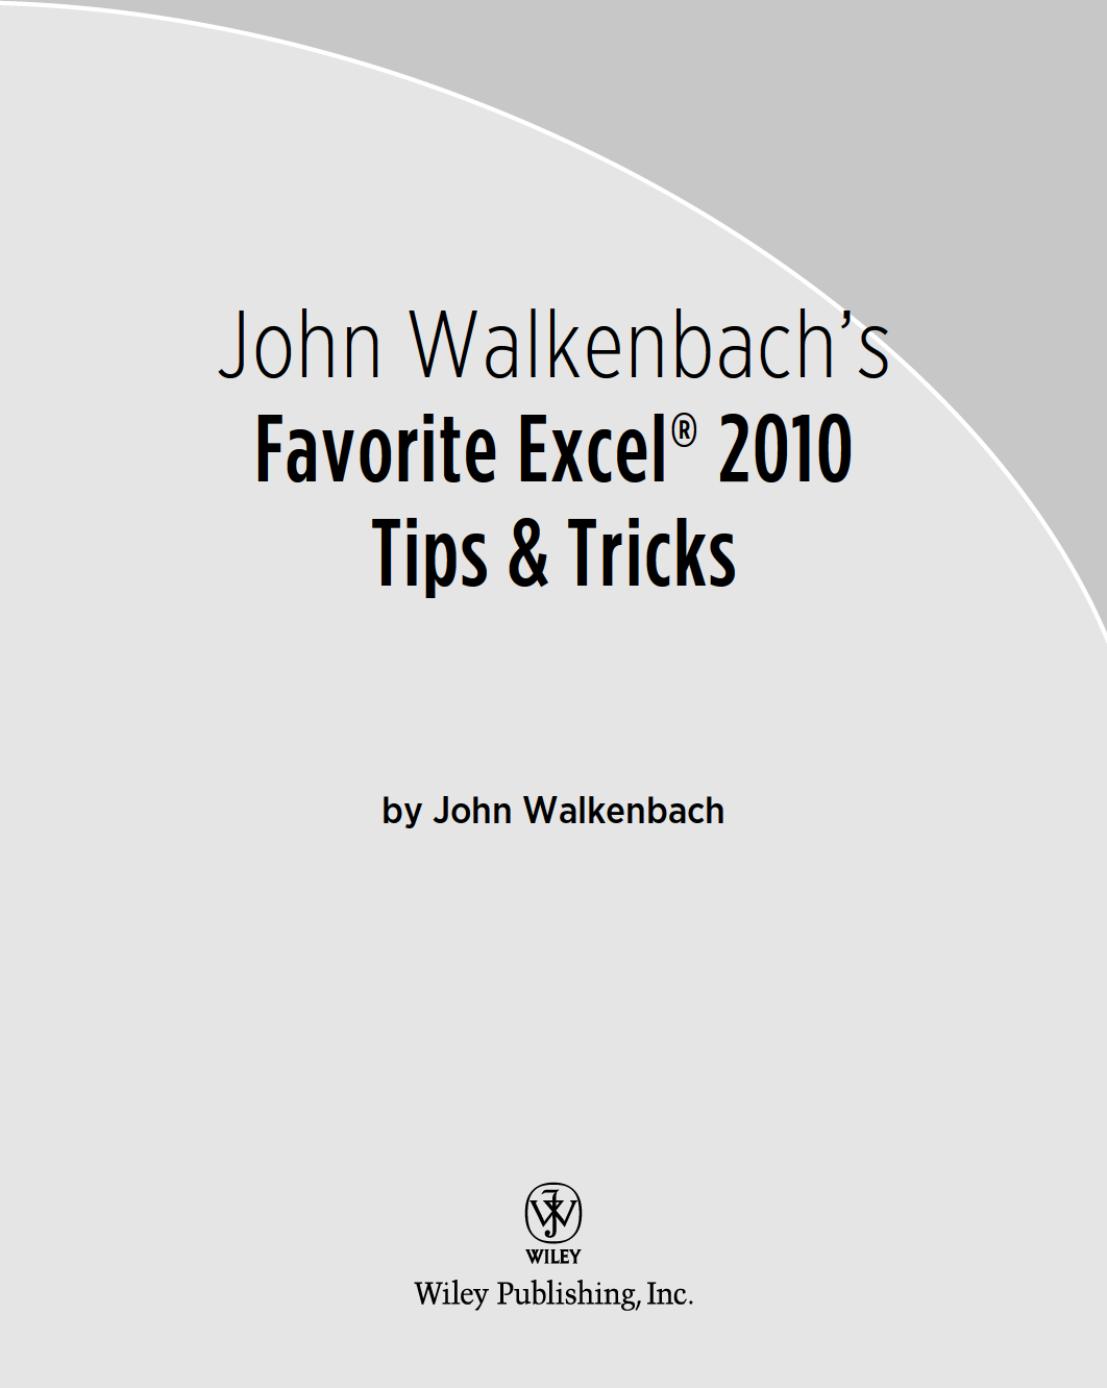 John Walkenbach's Favorite Excel 2010 Tips and Tricks by John Walkenbach